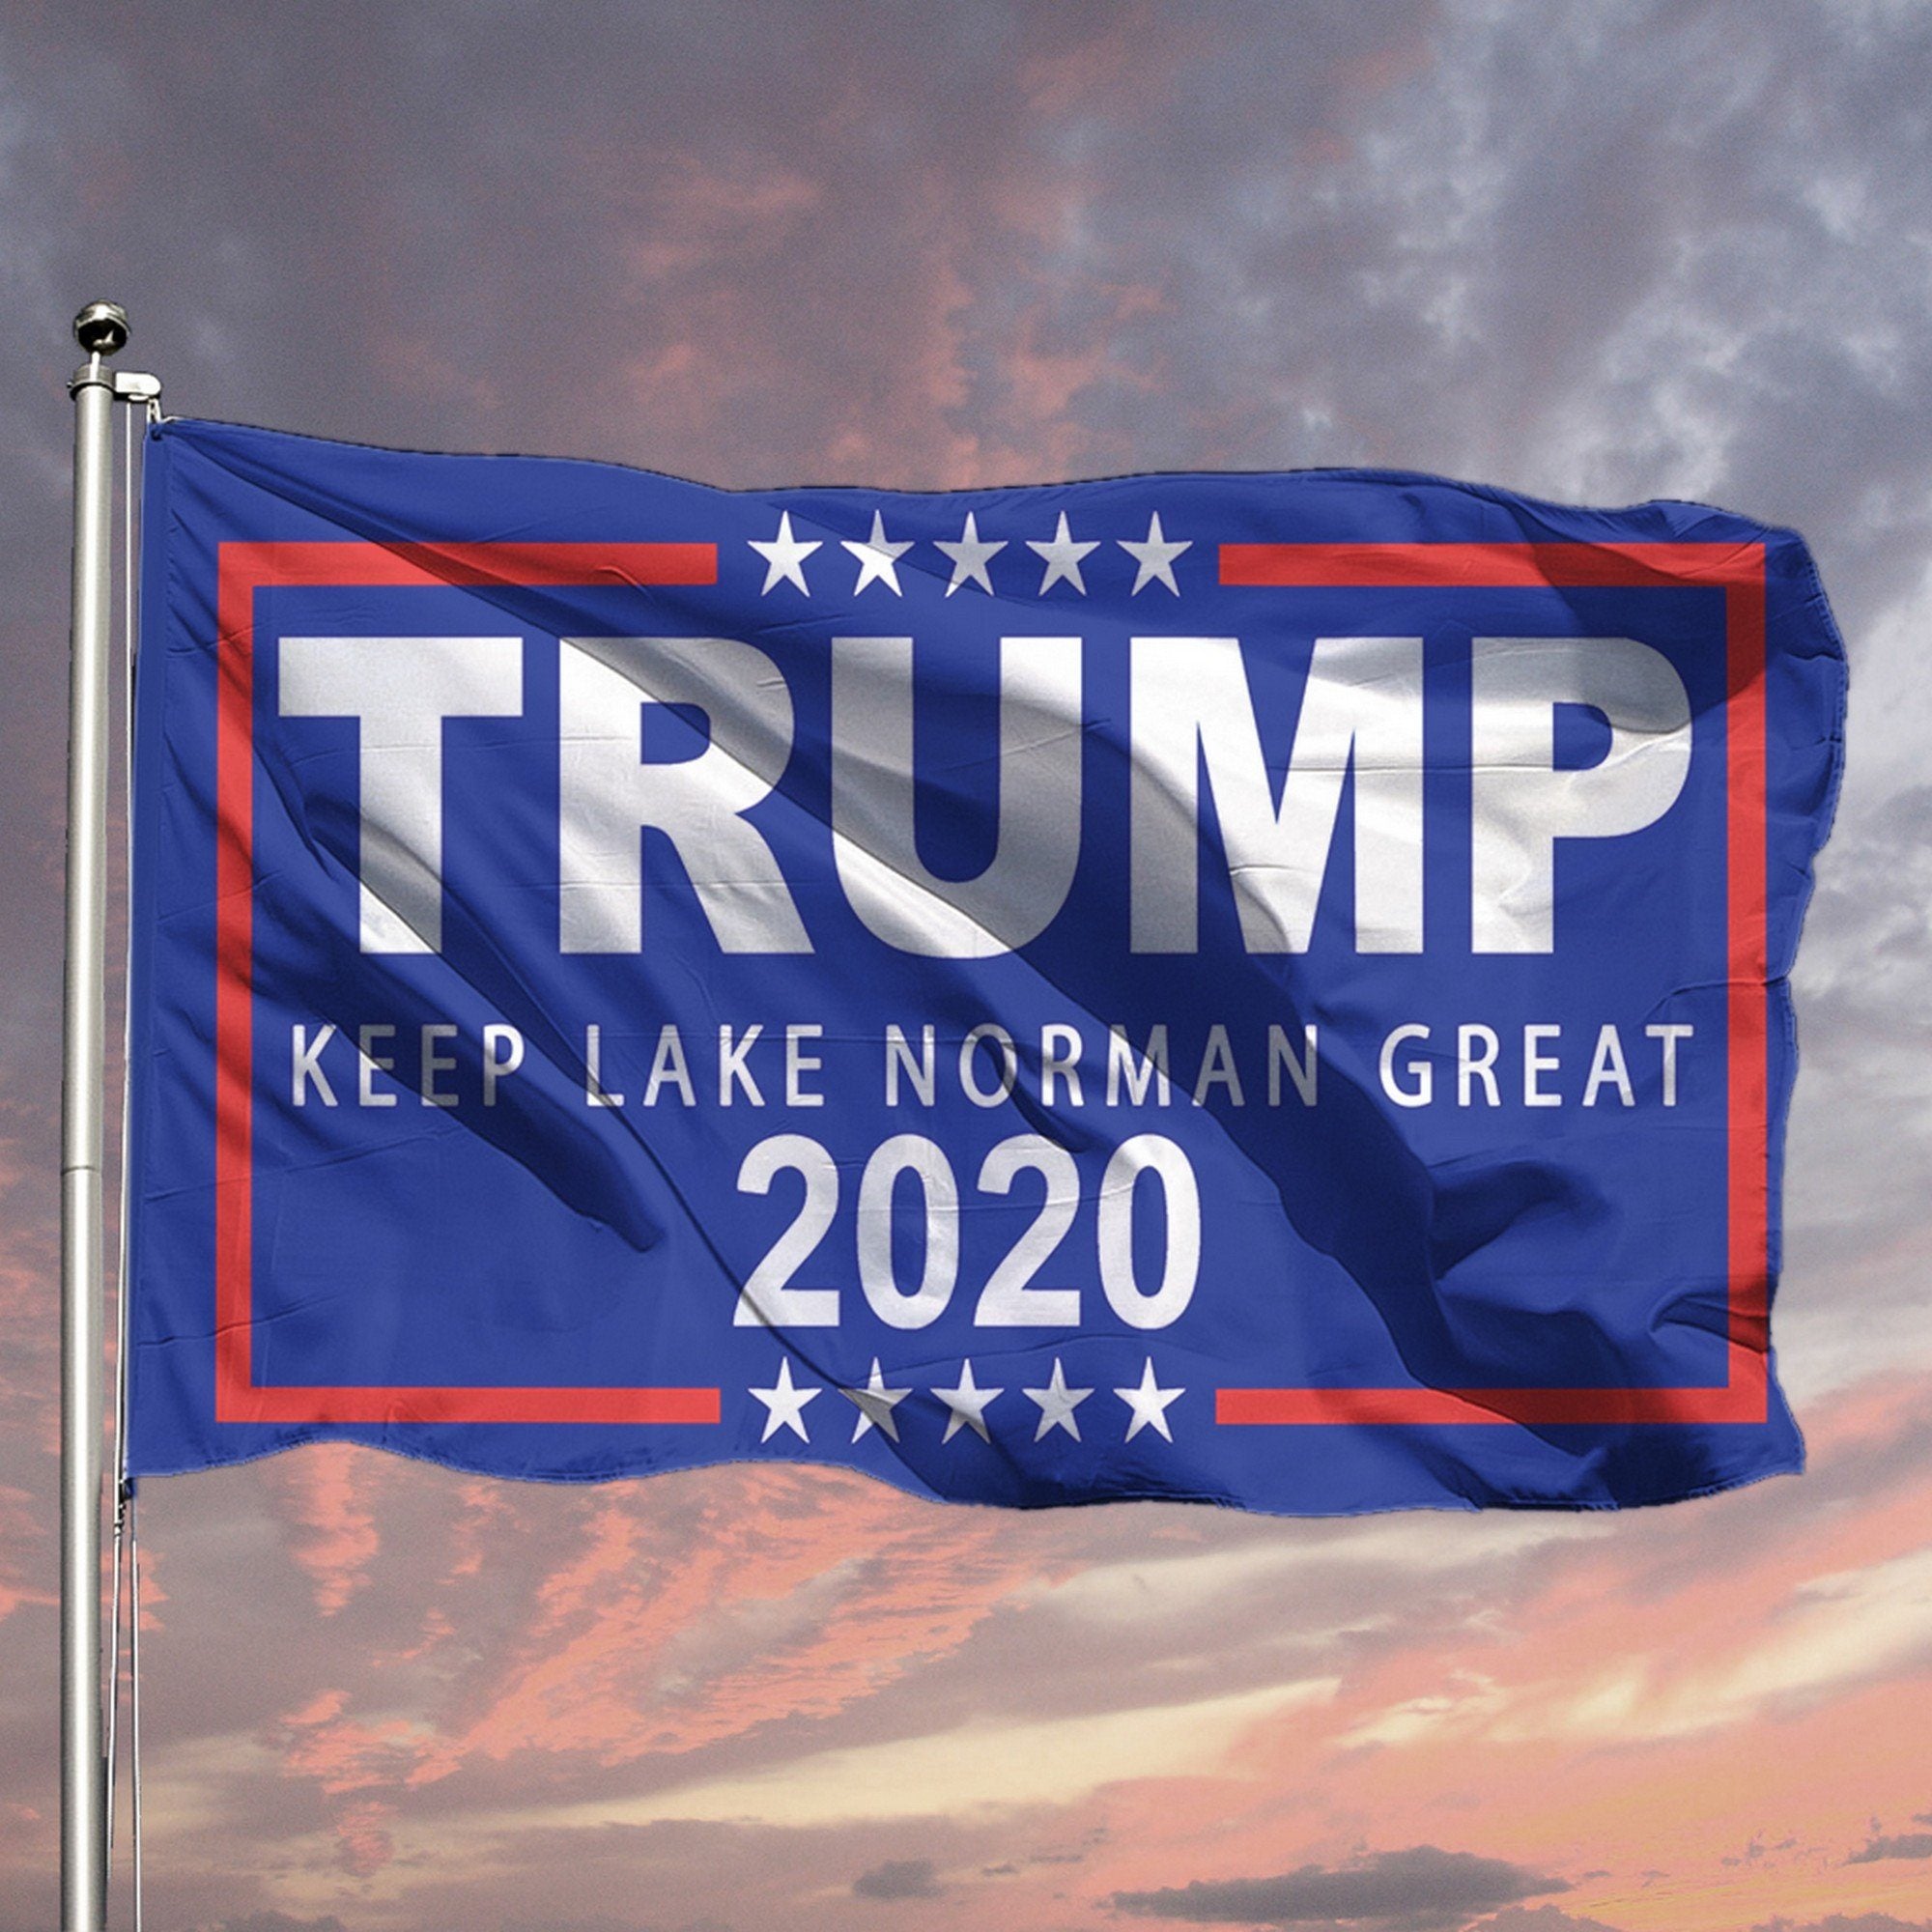 Trump Boat Flags - Keep Lake Norman Great - Houseboat Kings